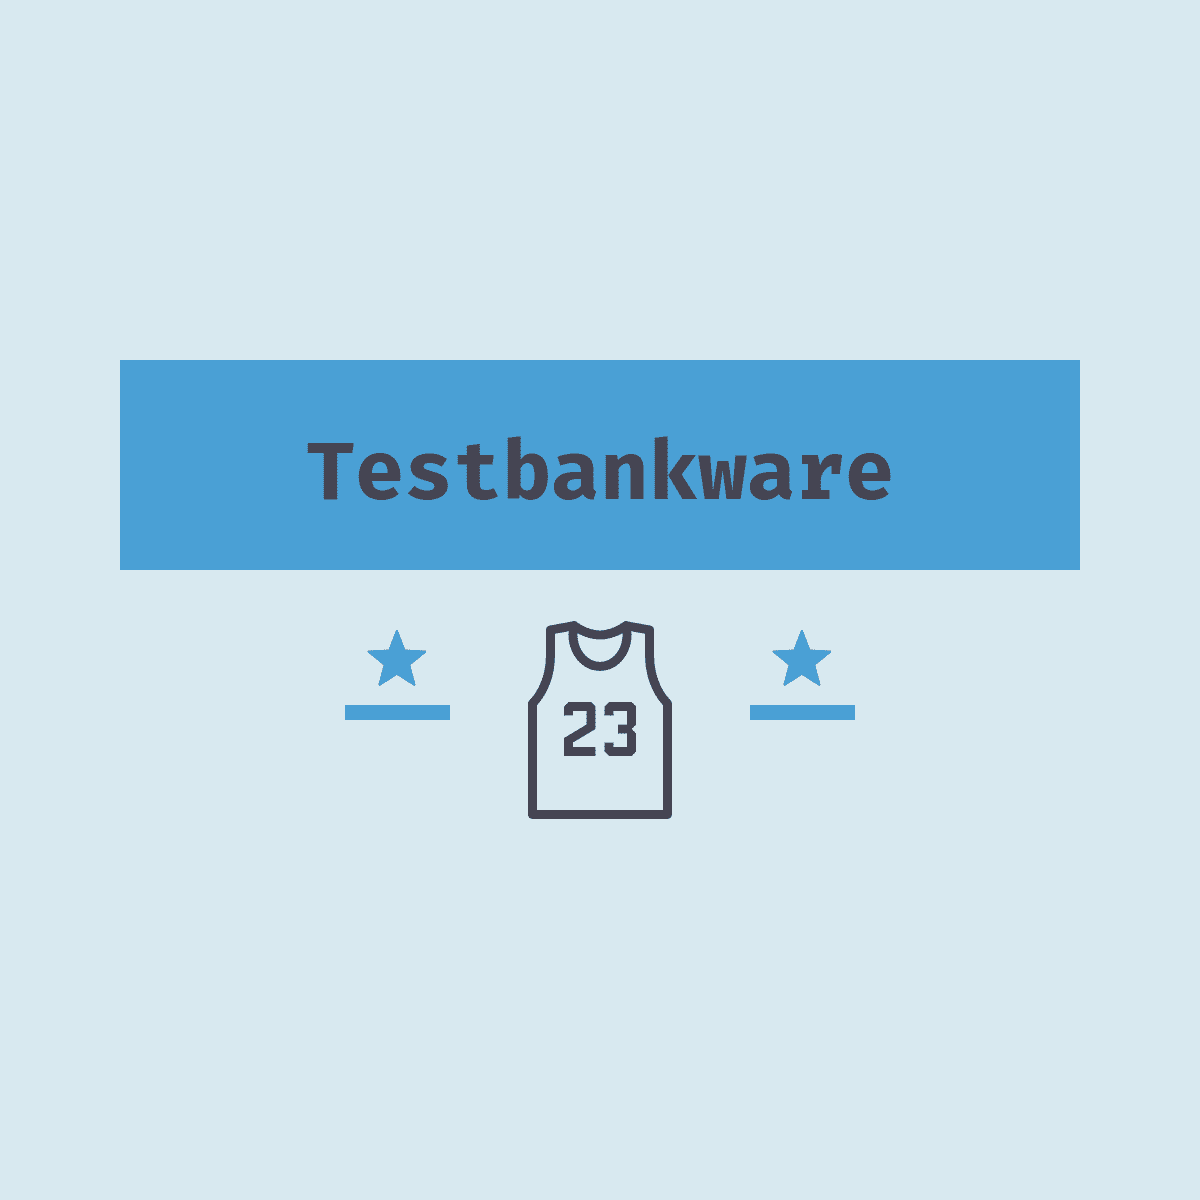 Testbankware